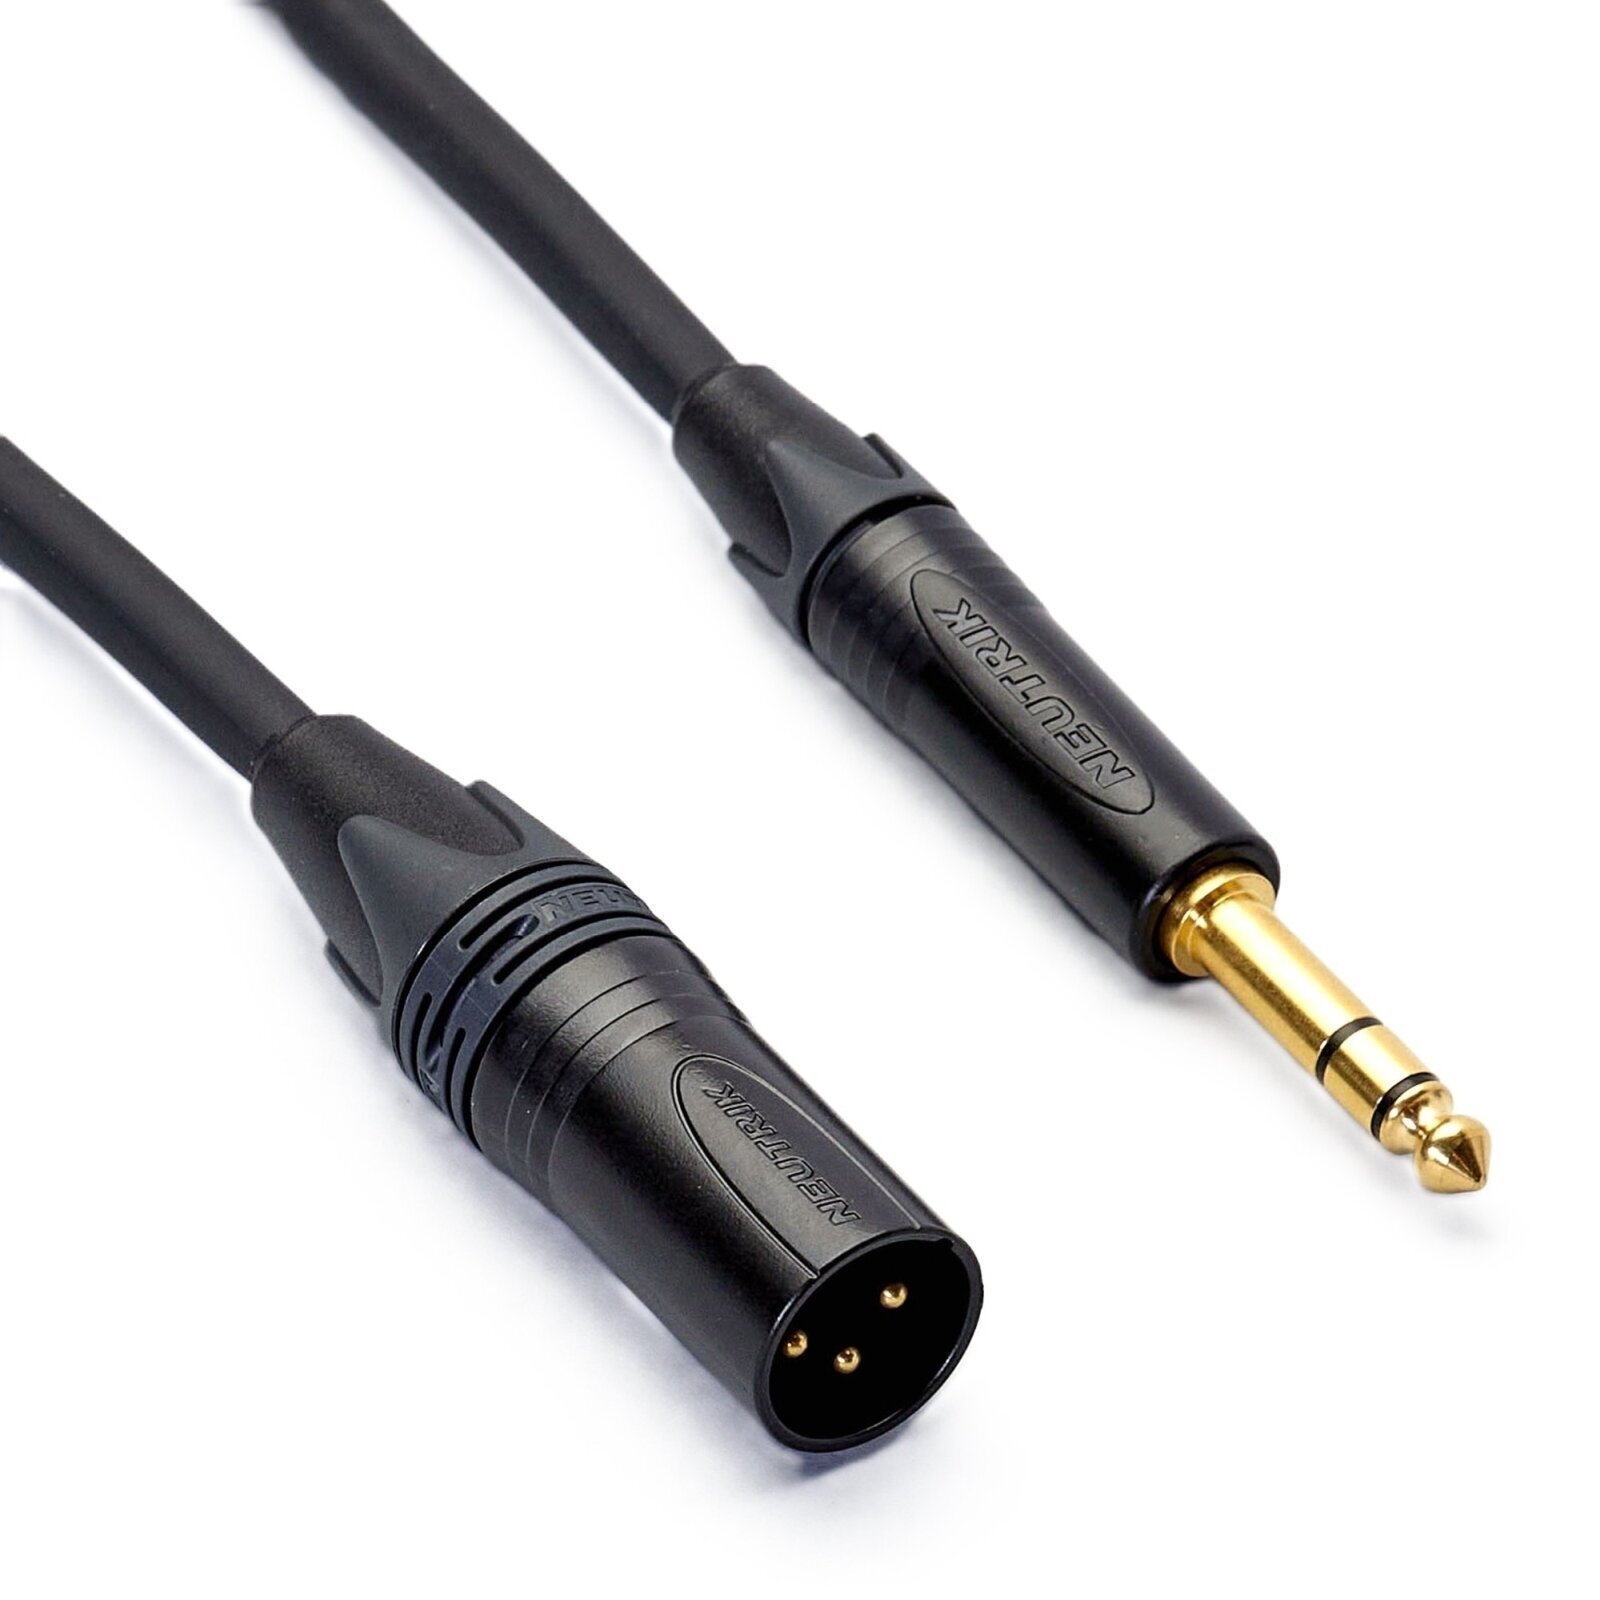 Loudspeaker Cable Bespeco AHSMM450 Black 4,5 m